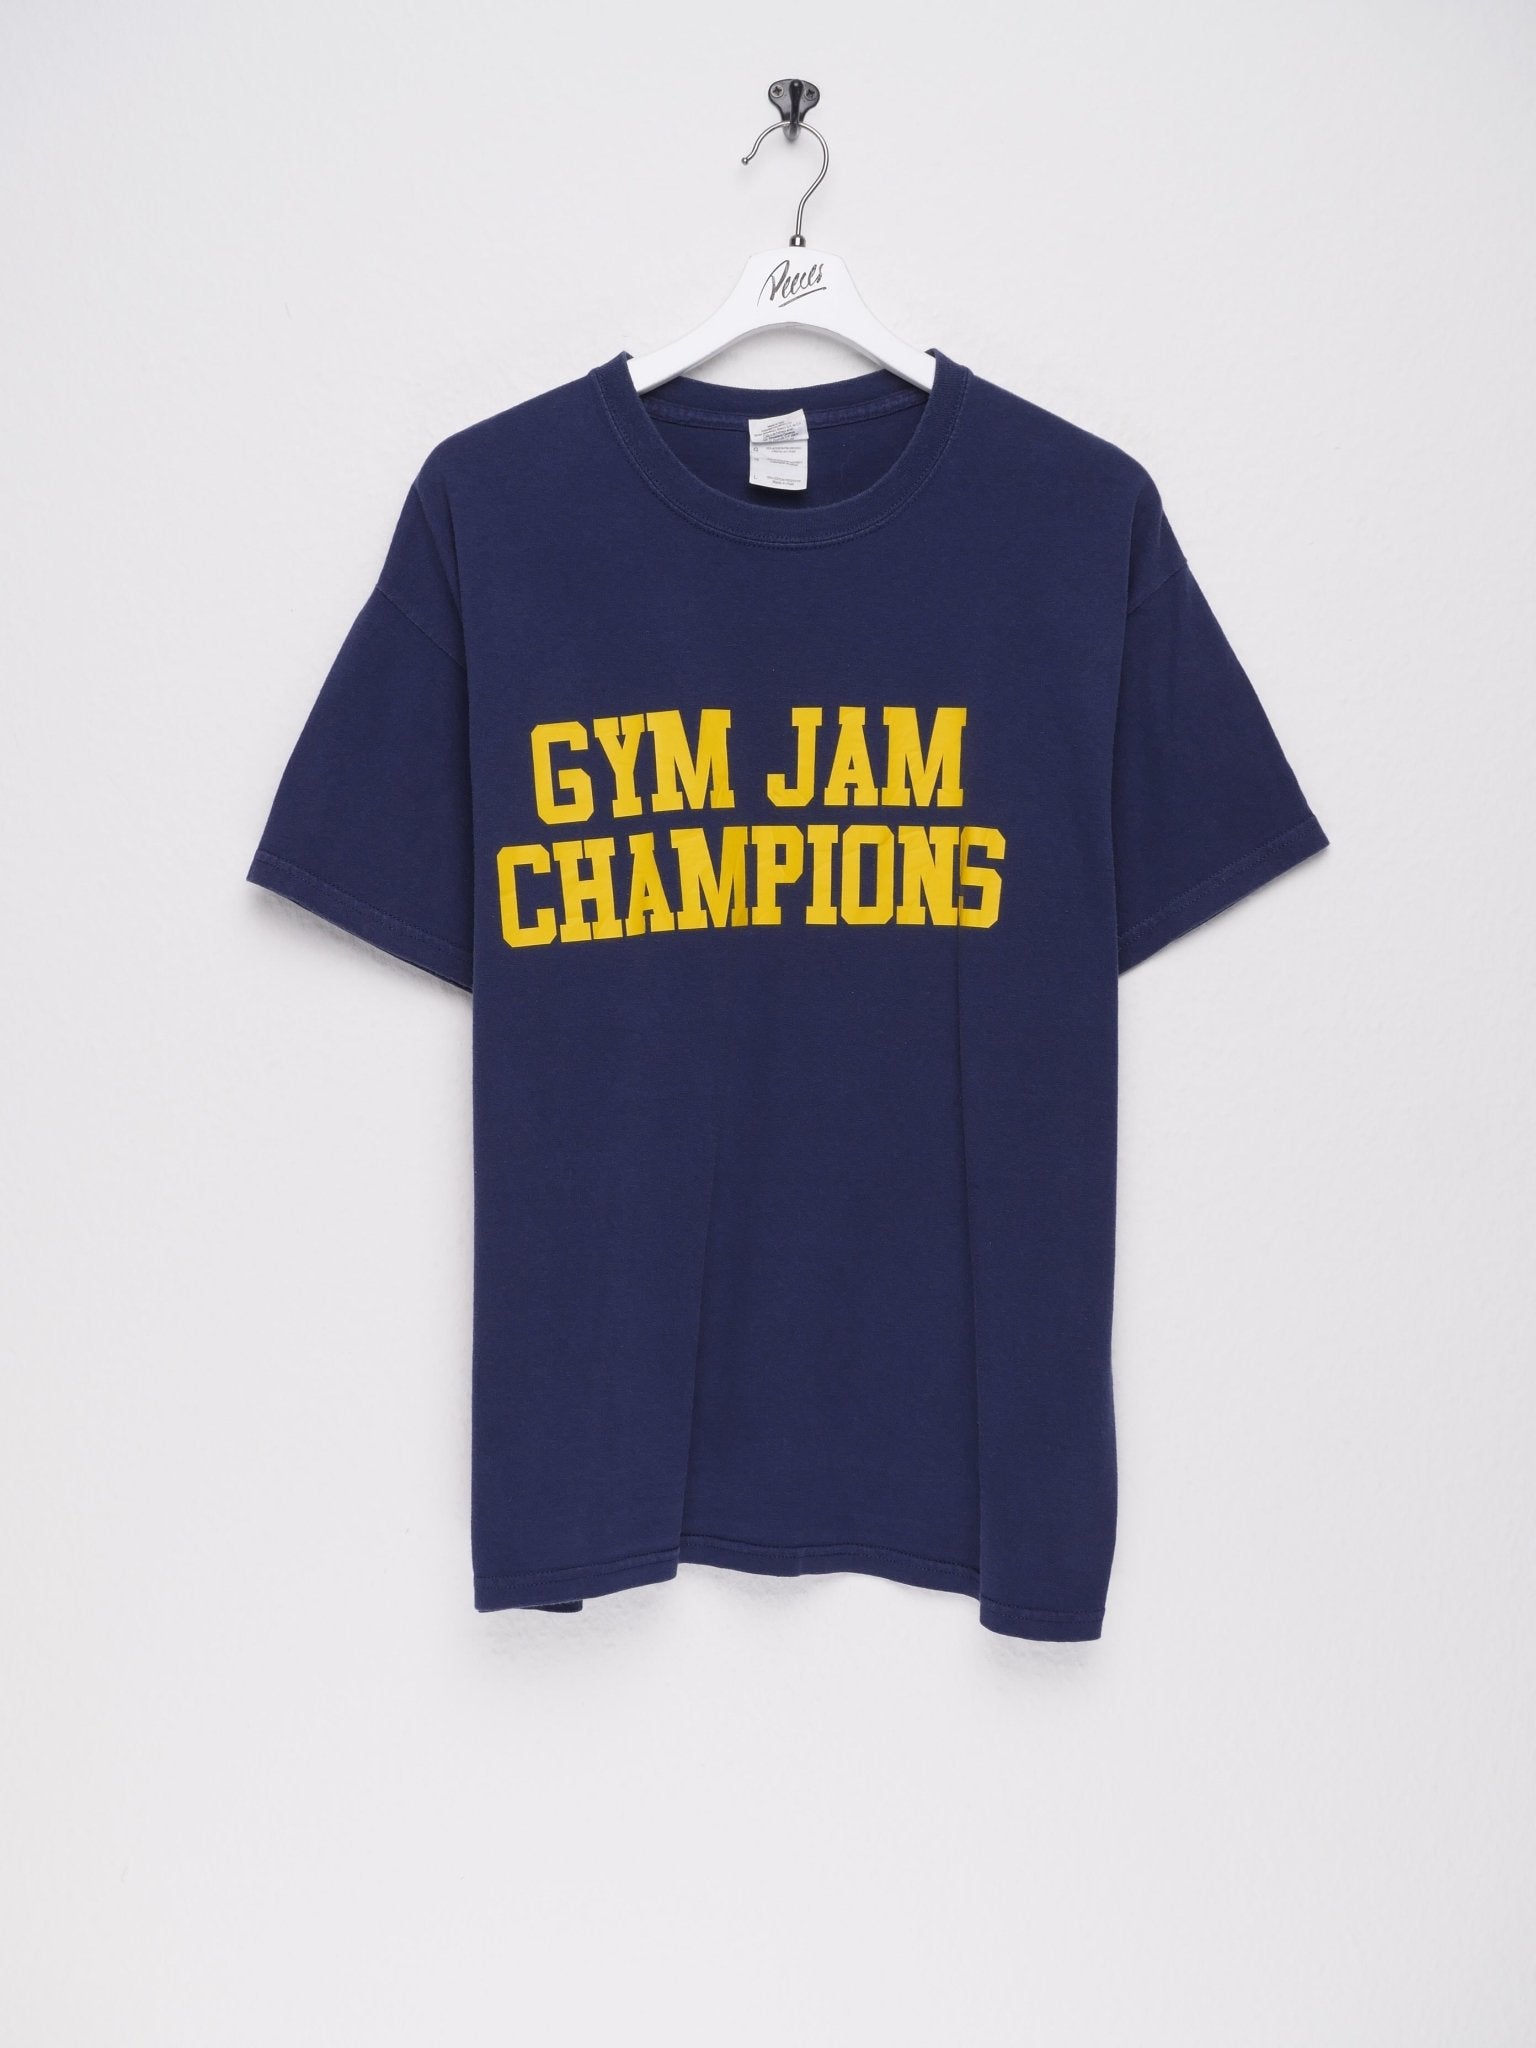 gym jam champions printed logo Shirt - Peeces